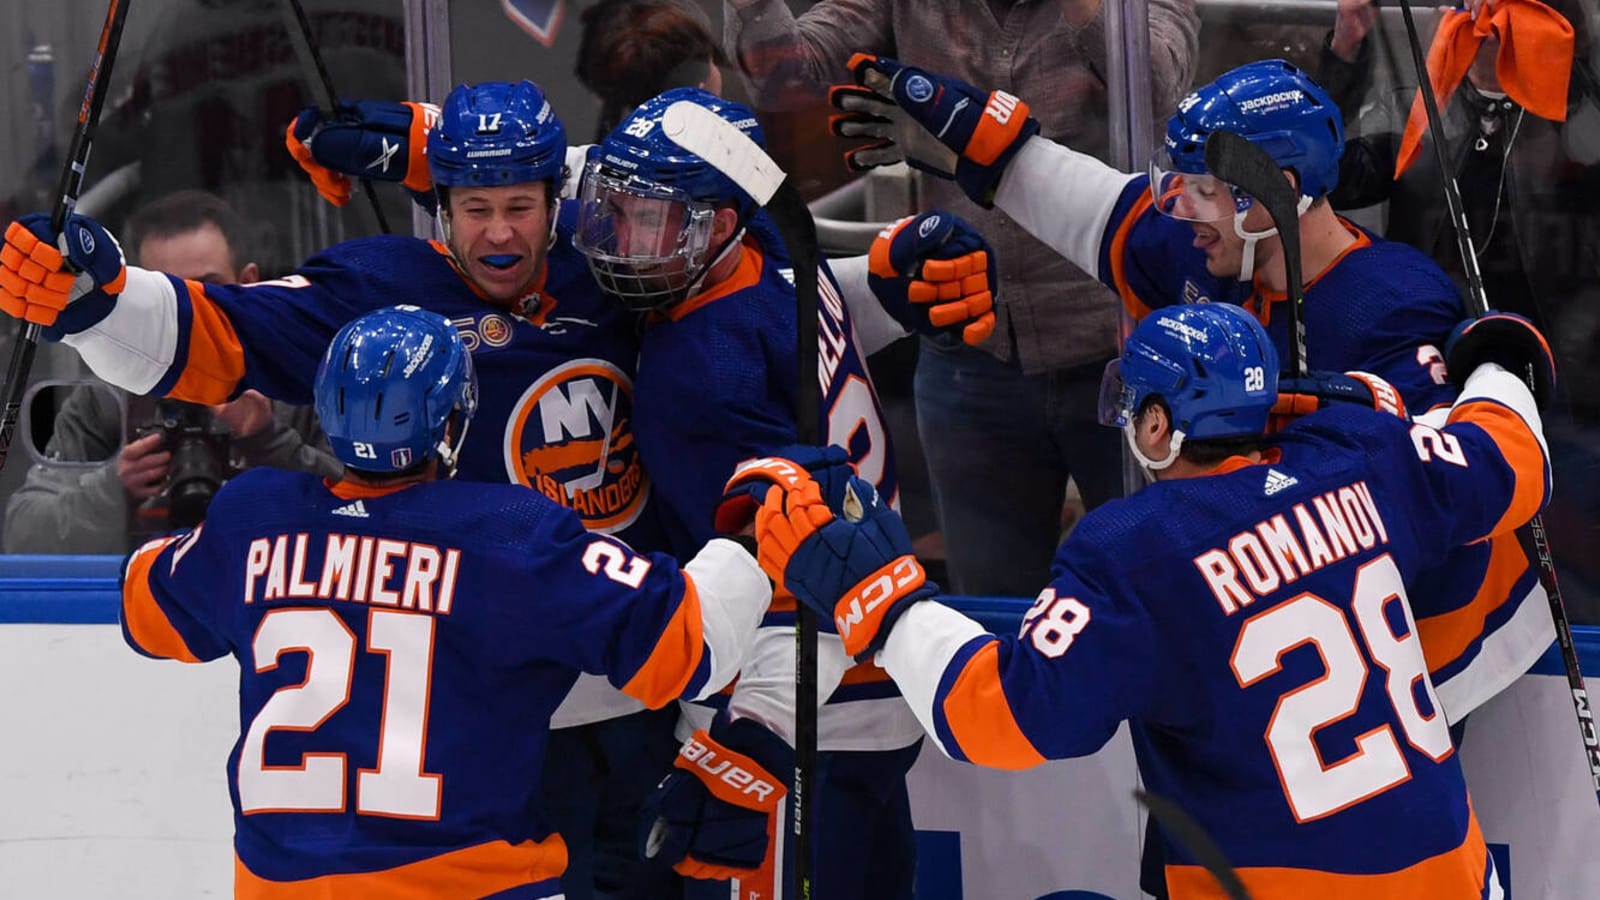 Late goal flurry helps Islanders break longstanding NHL mark